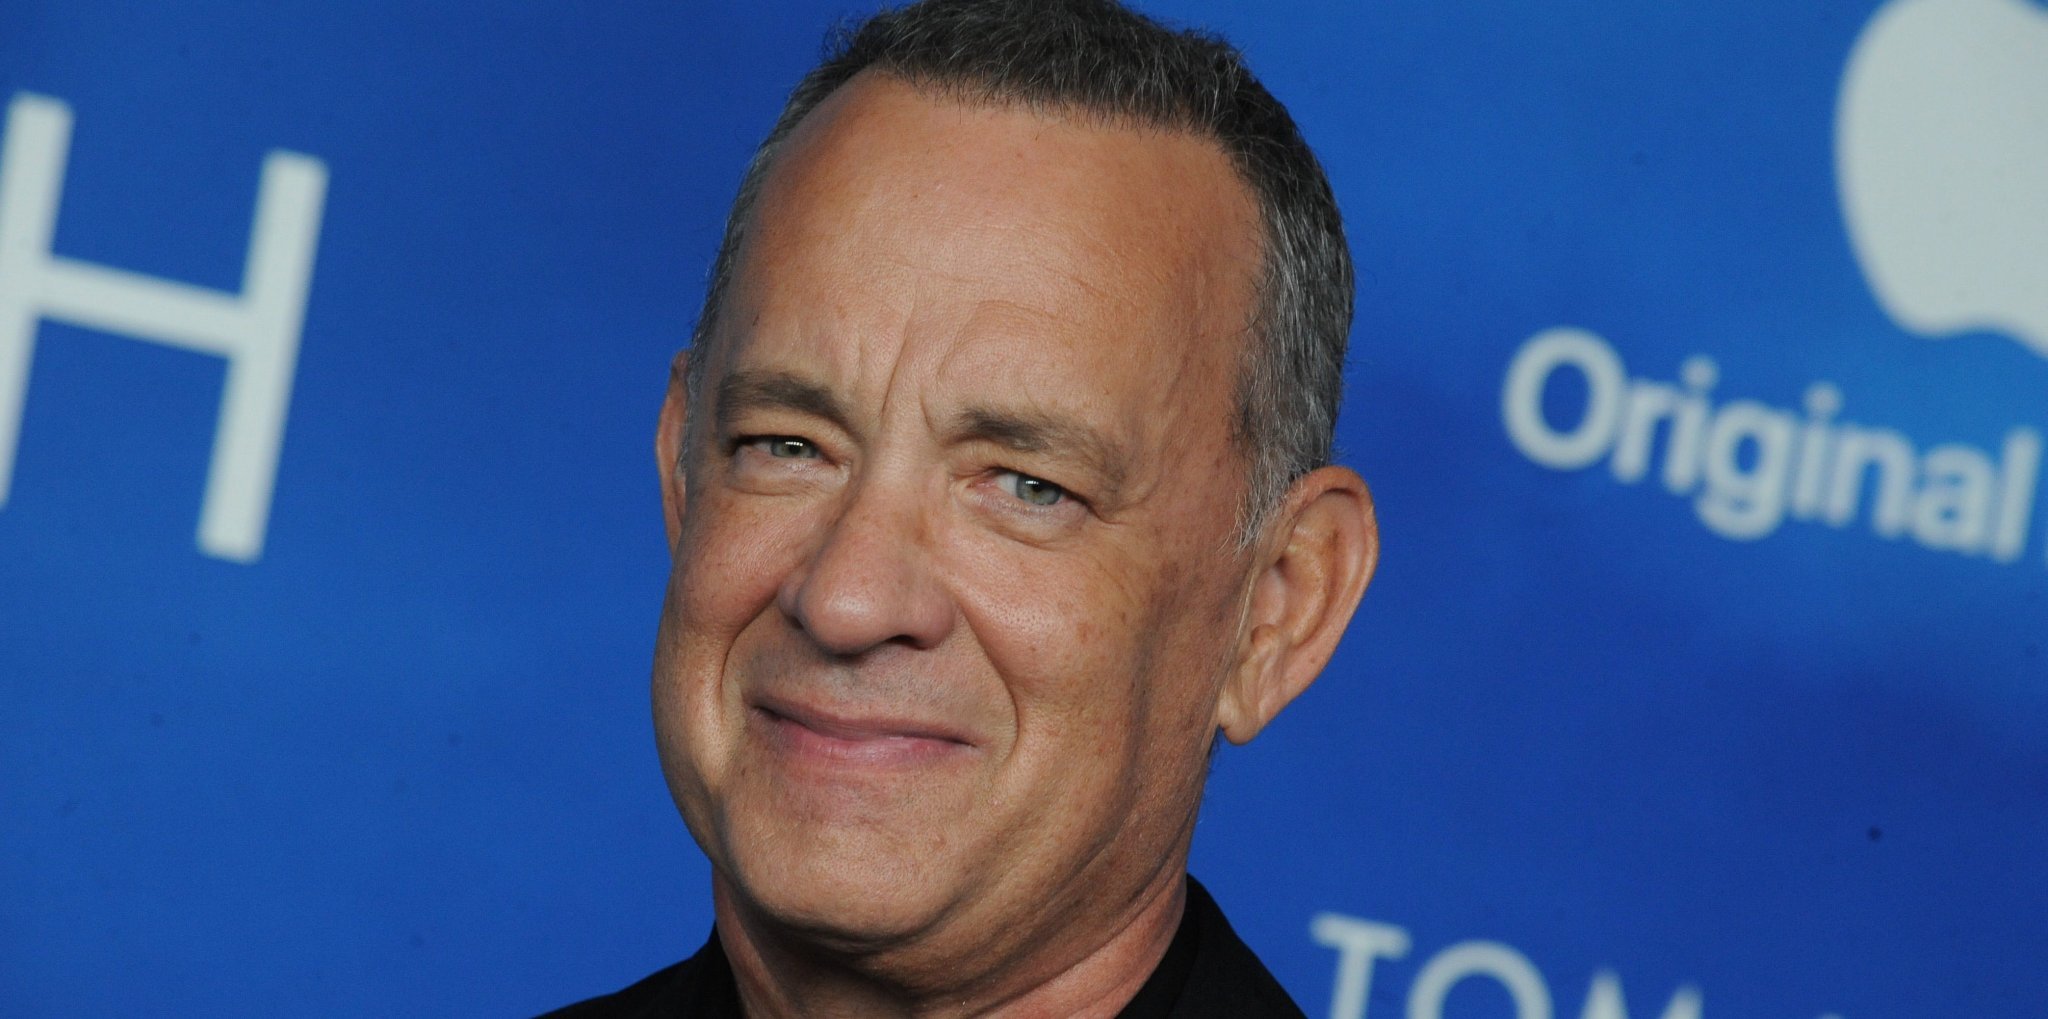 Tom Hanks Warns Against Deepfake Of His Image Promoting Dental Plan